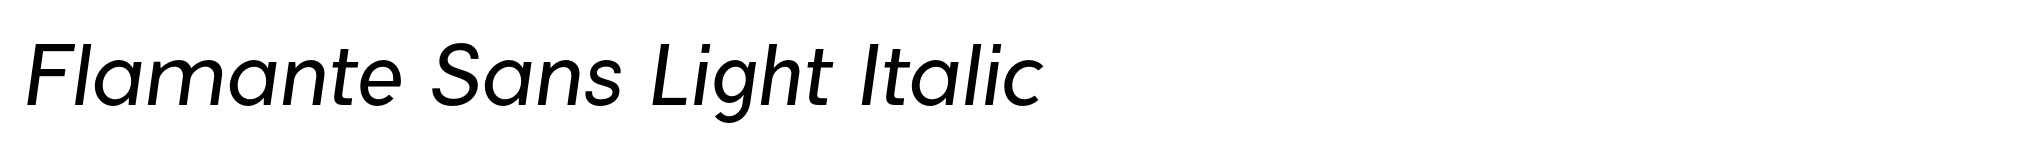 Flamante Sans Light Italic image